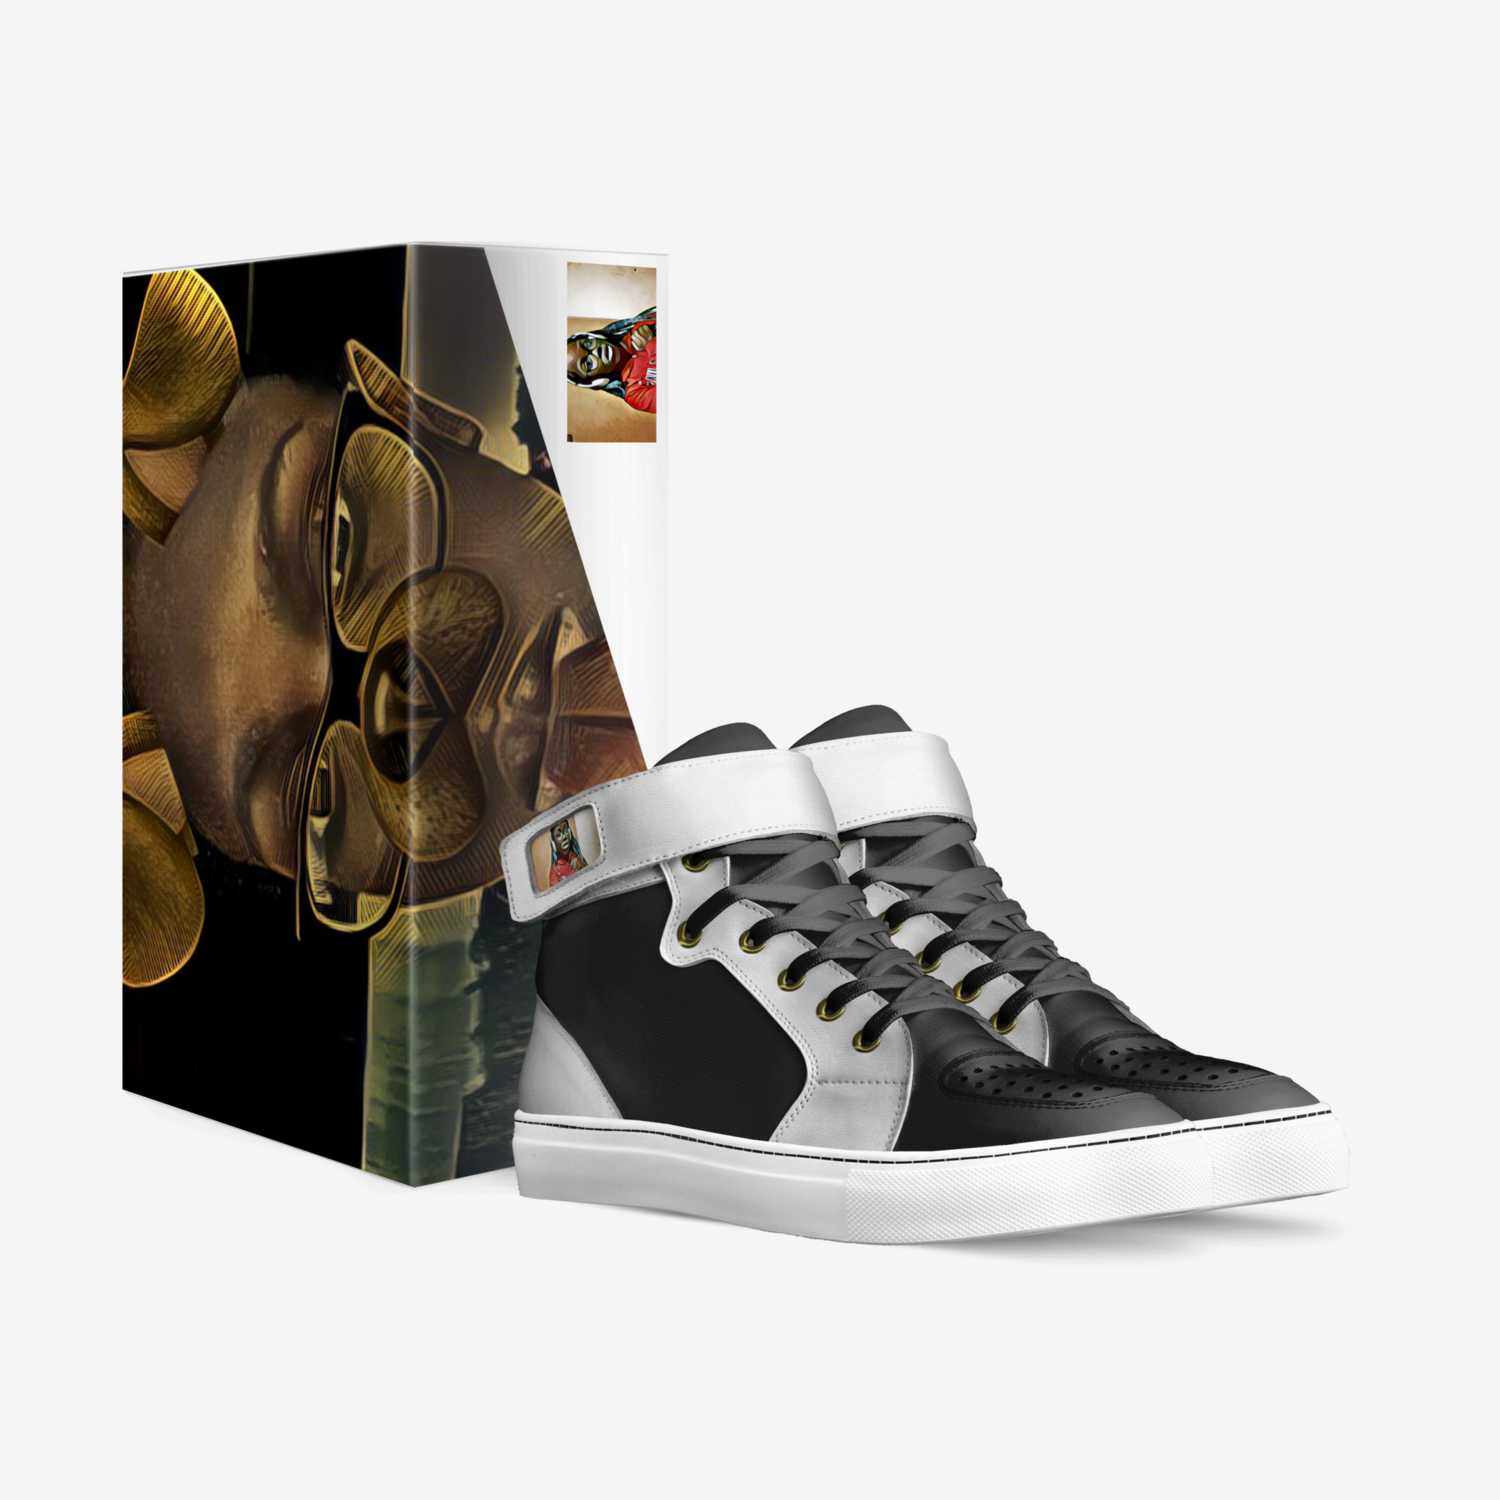 KyRich1 custom made in Italy shoes by Nikylah I. Hunter | Box view